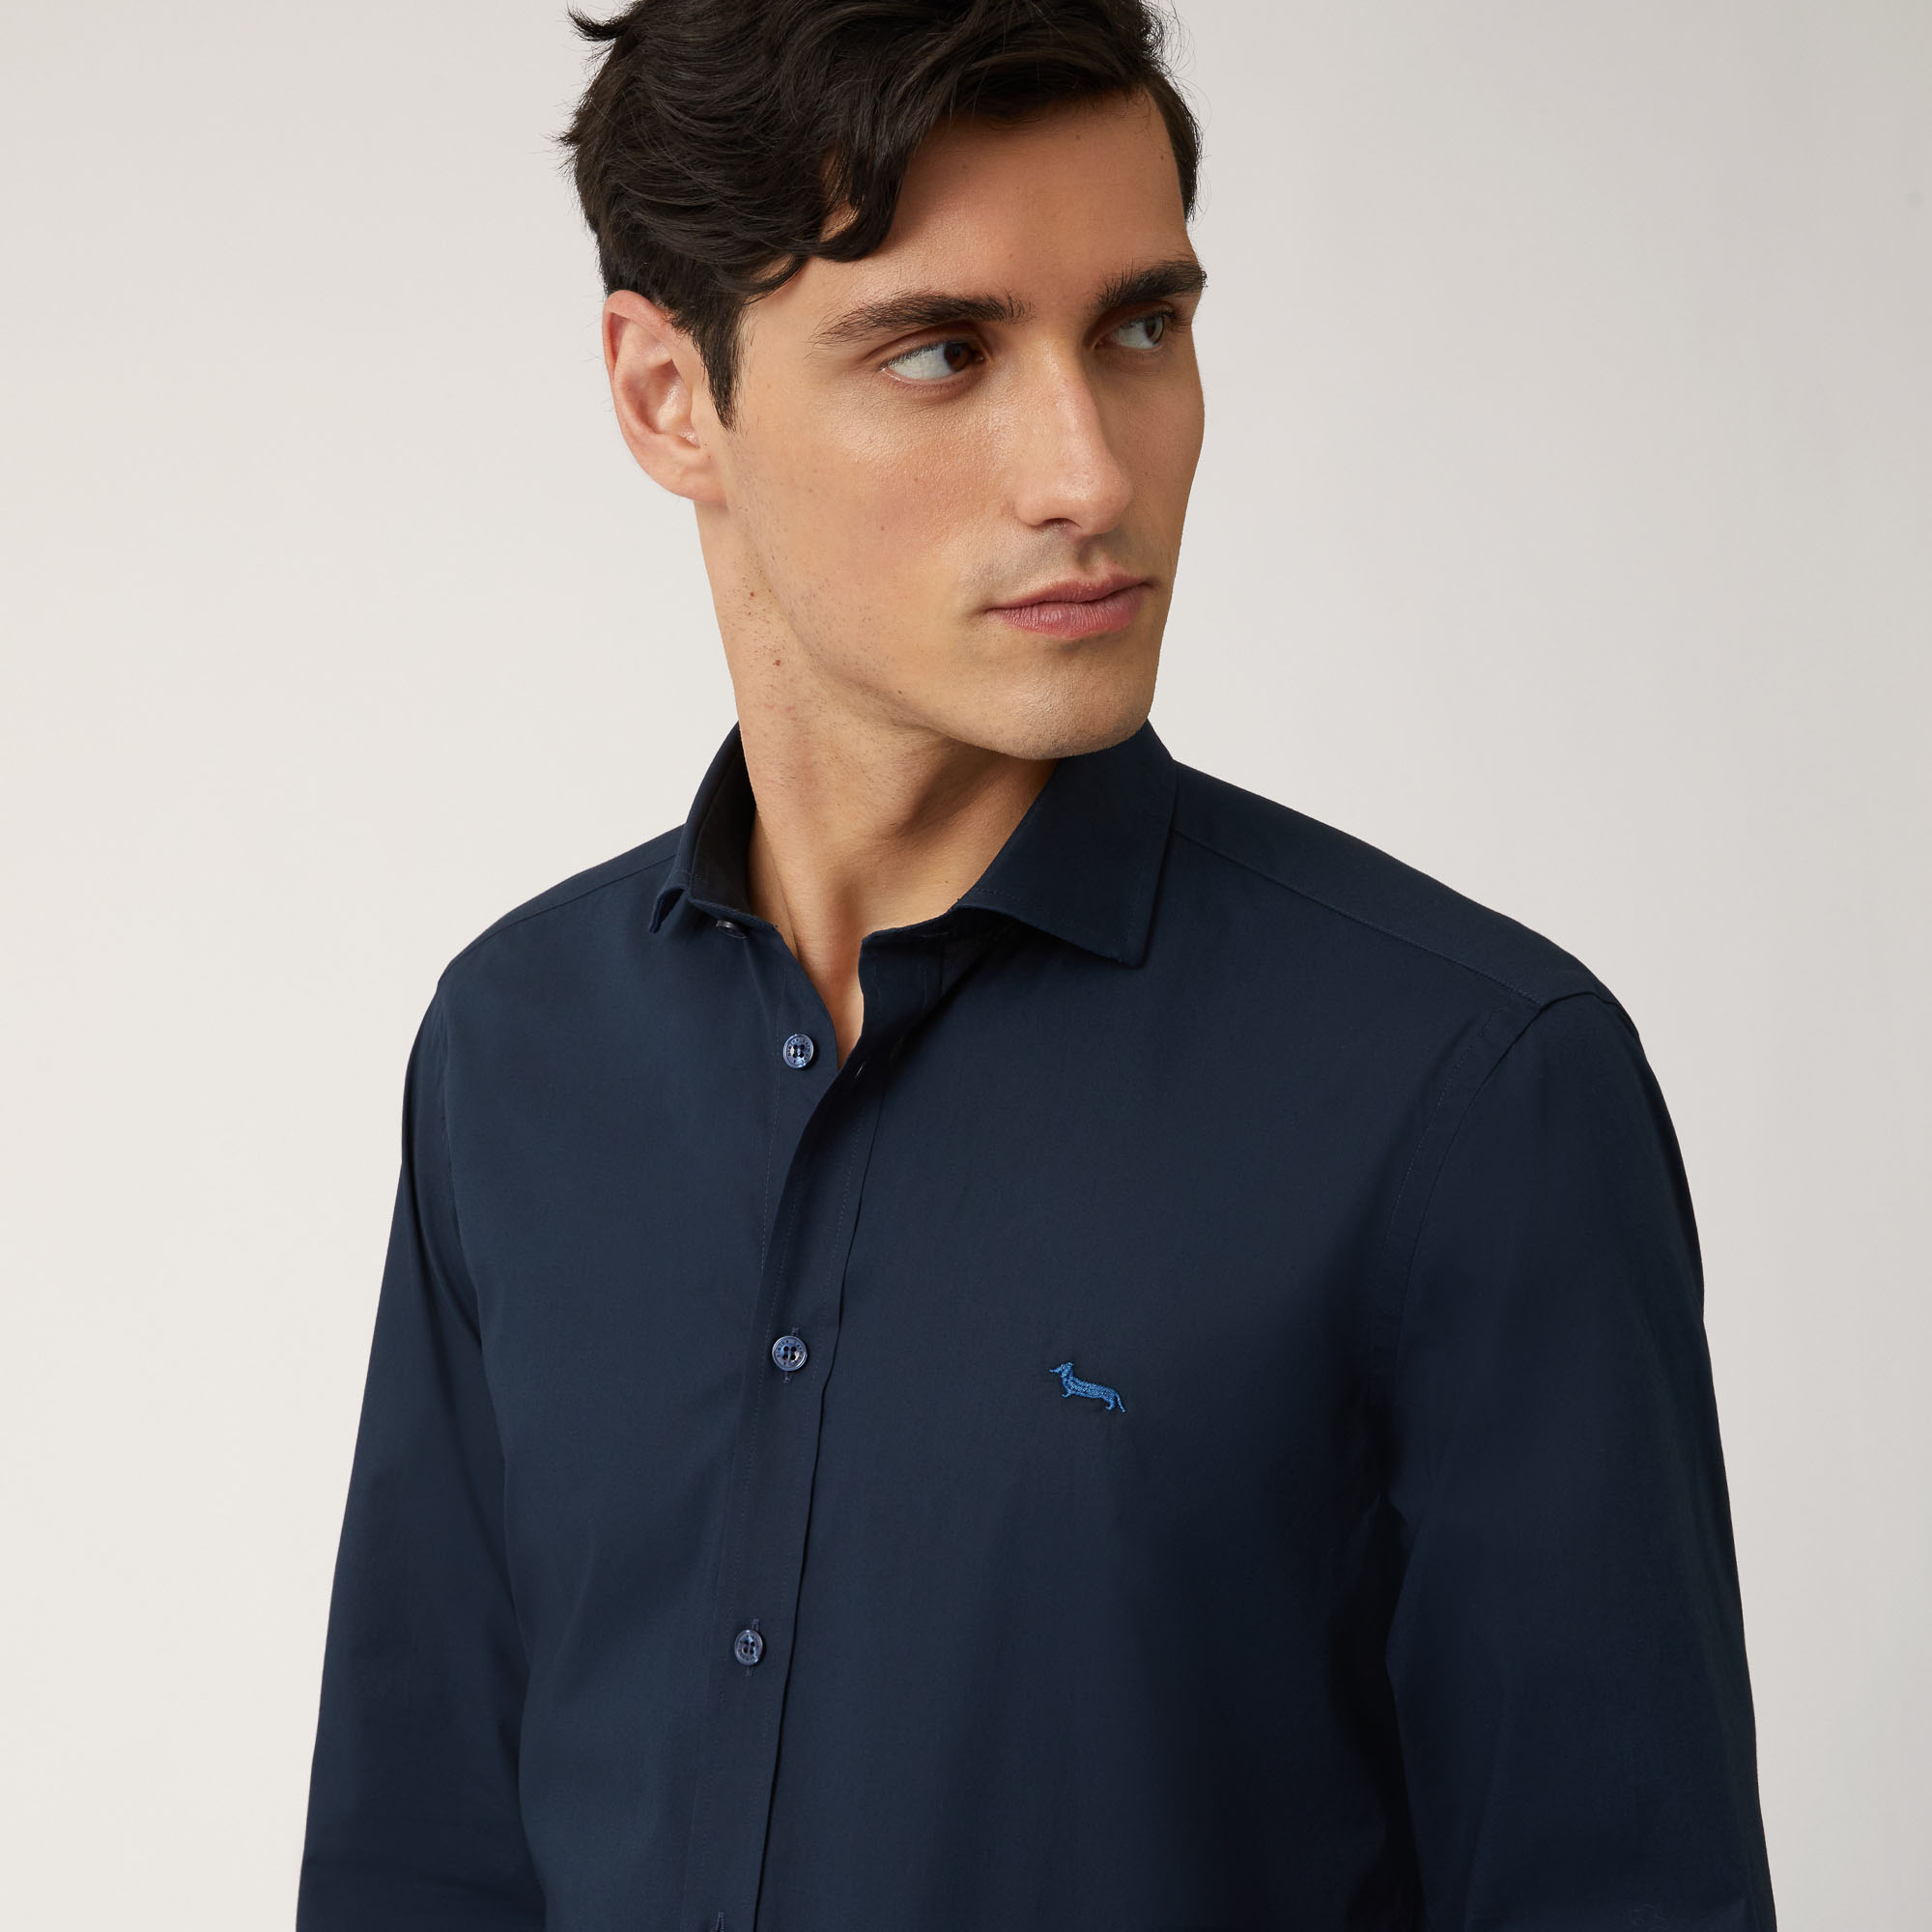 Camicia In Cotone Stretch Con Interni A Contrasto, Blu Navy, large image number 2